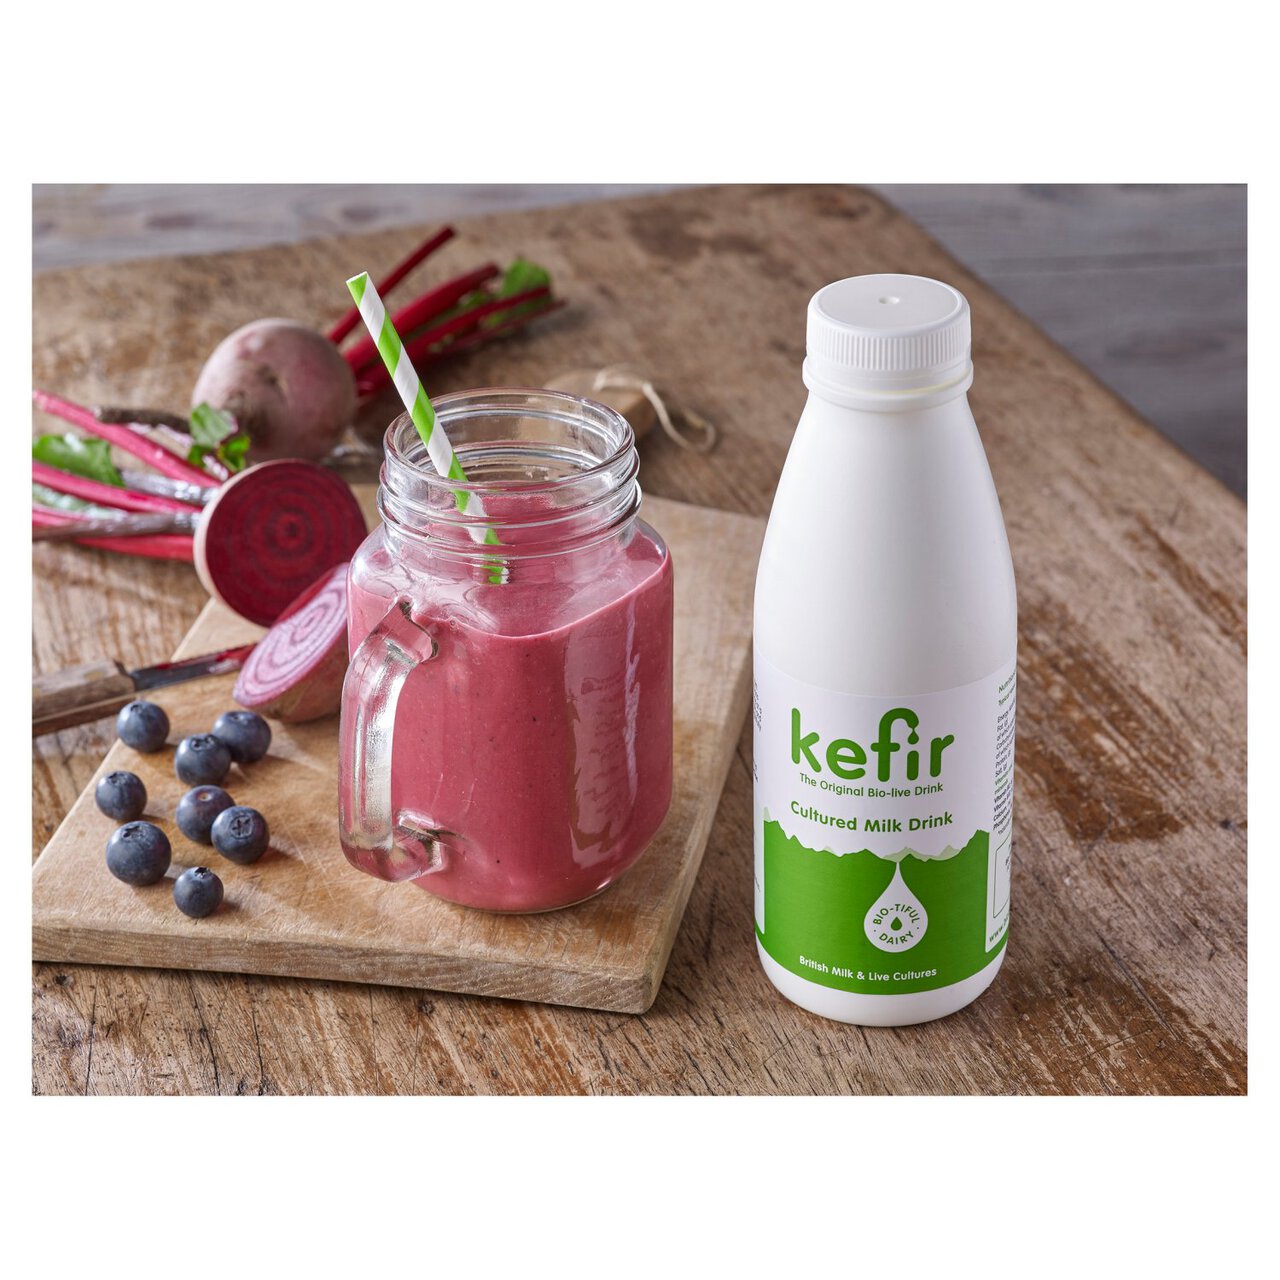 Biotiful Organic Kefir 500ml